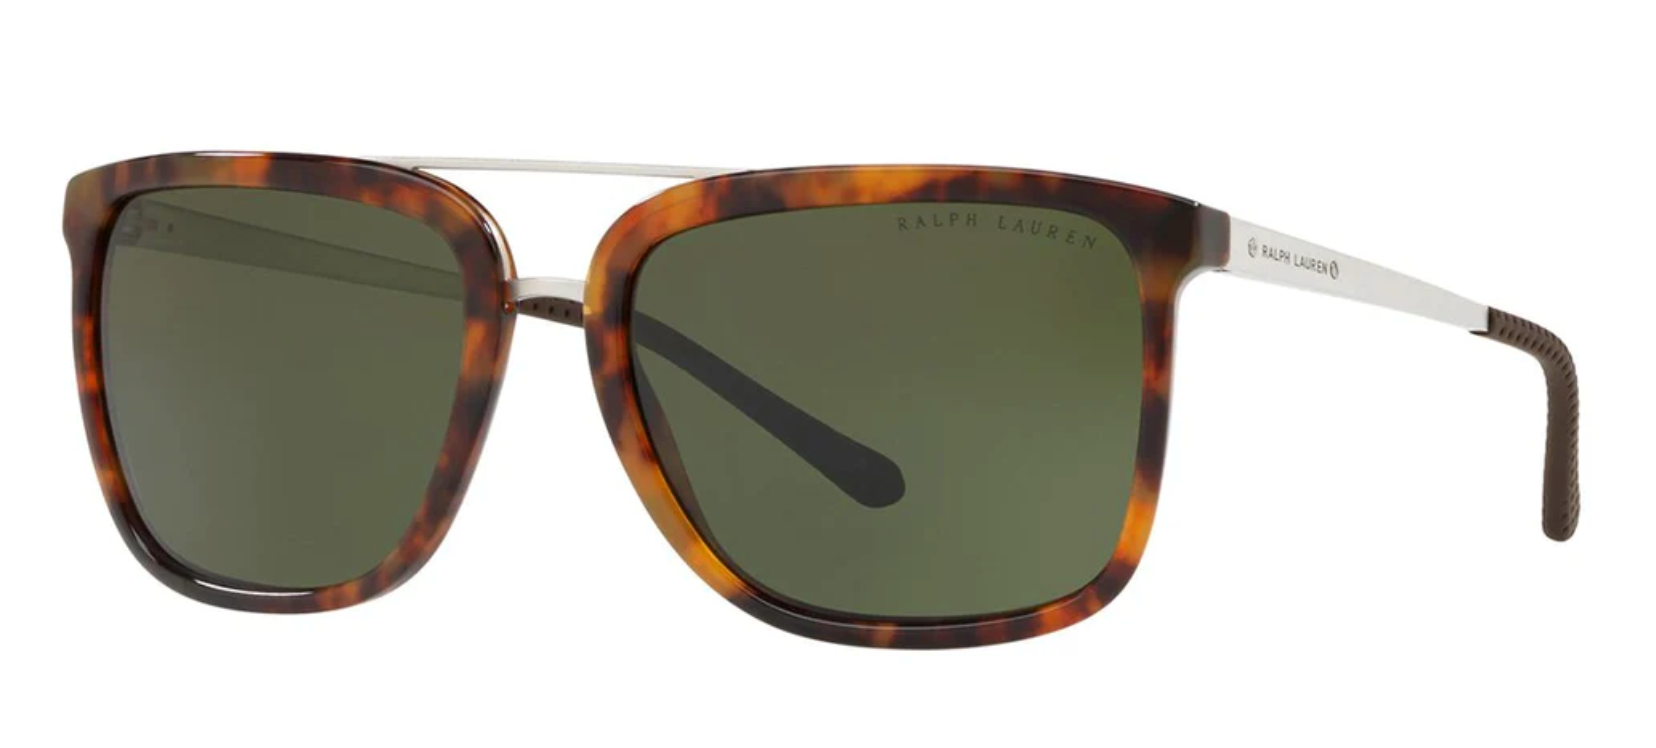 Ralph Lauren Women's Sunglasses Browline Tortoise/Green RL8164 501771